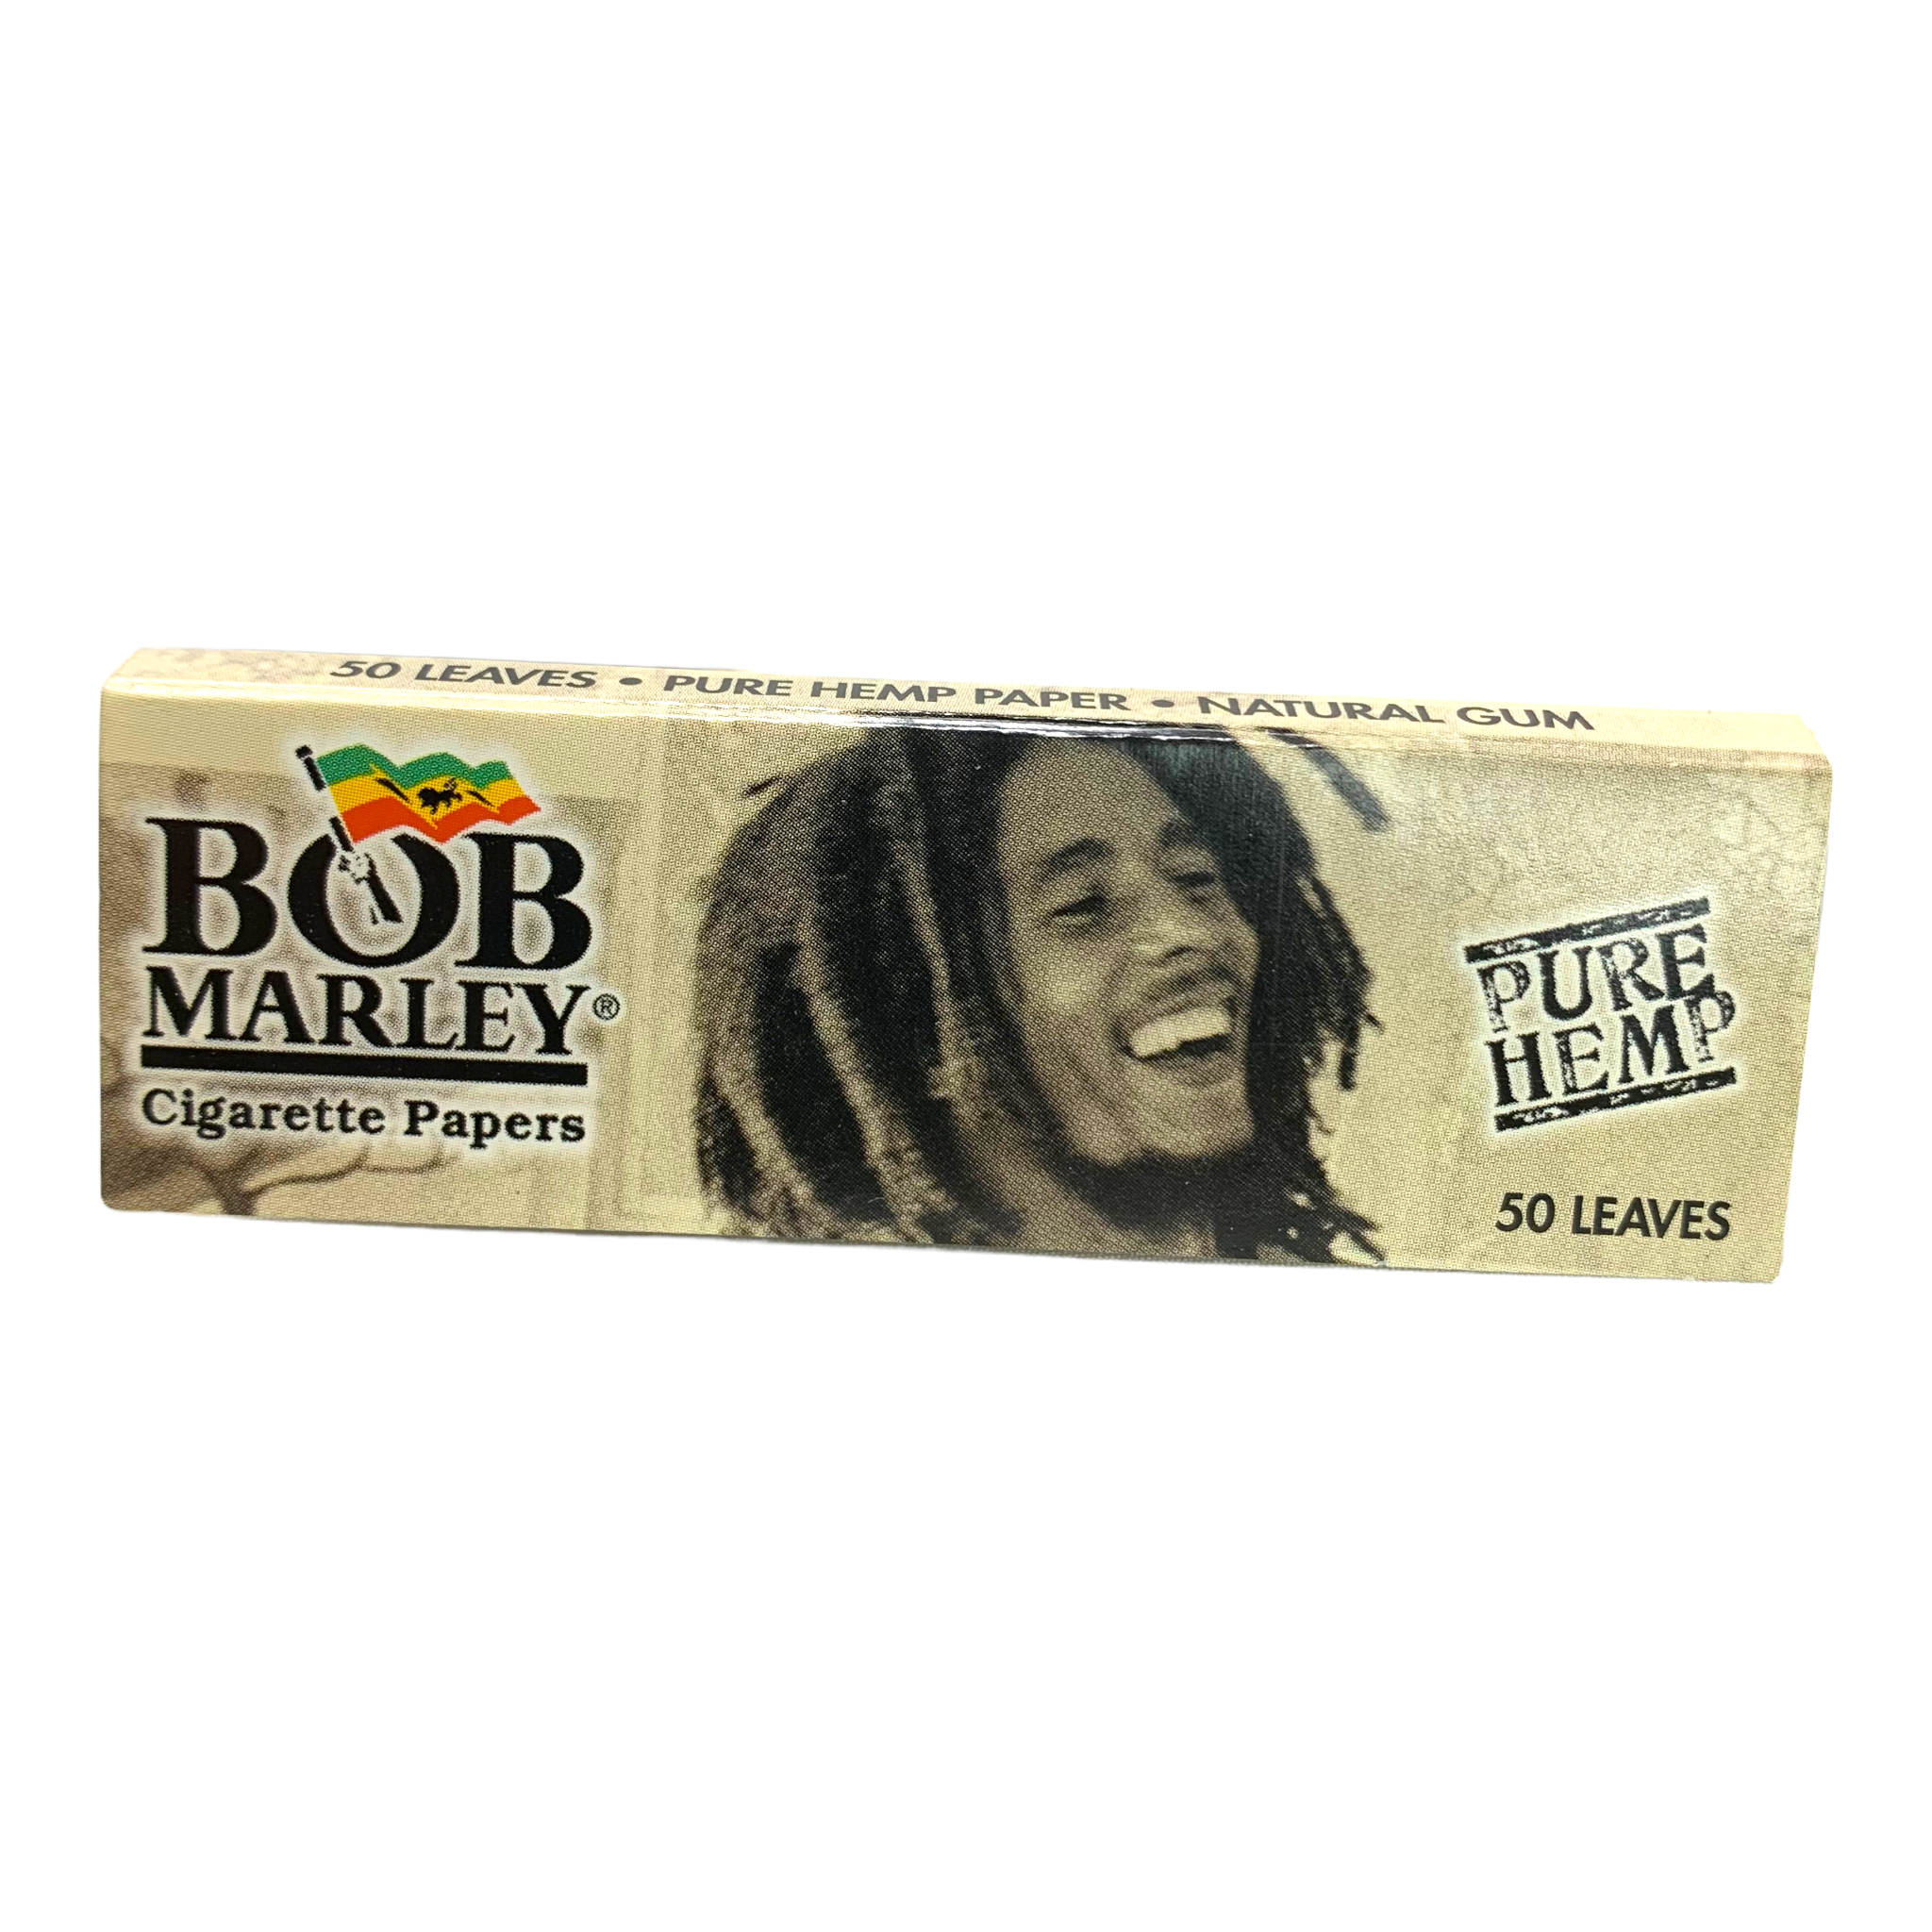 Papeles de Bob Marley